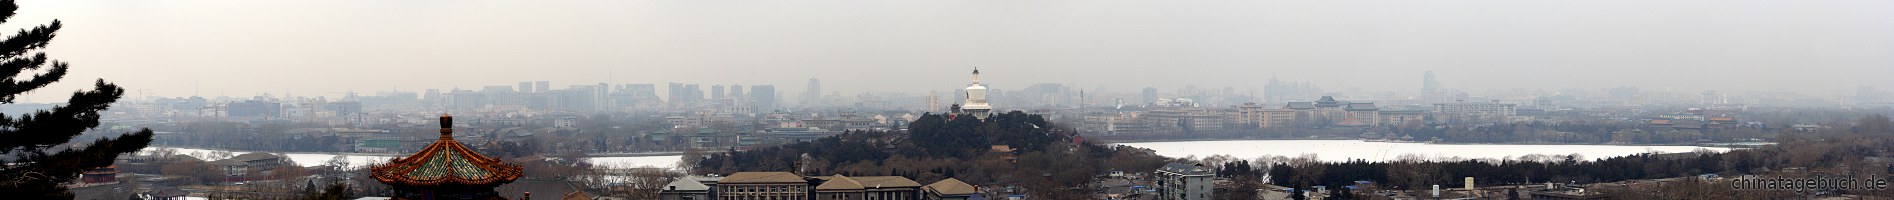 Panorama: Blick vom Jingshan auf den Beihai Park